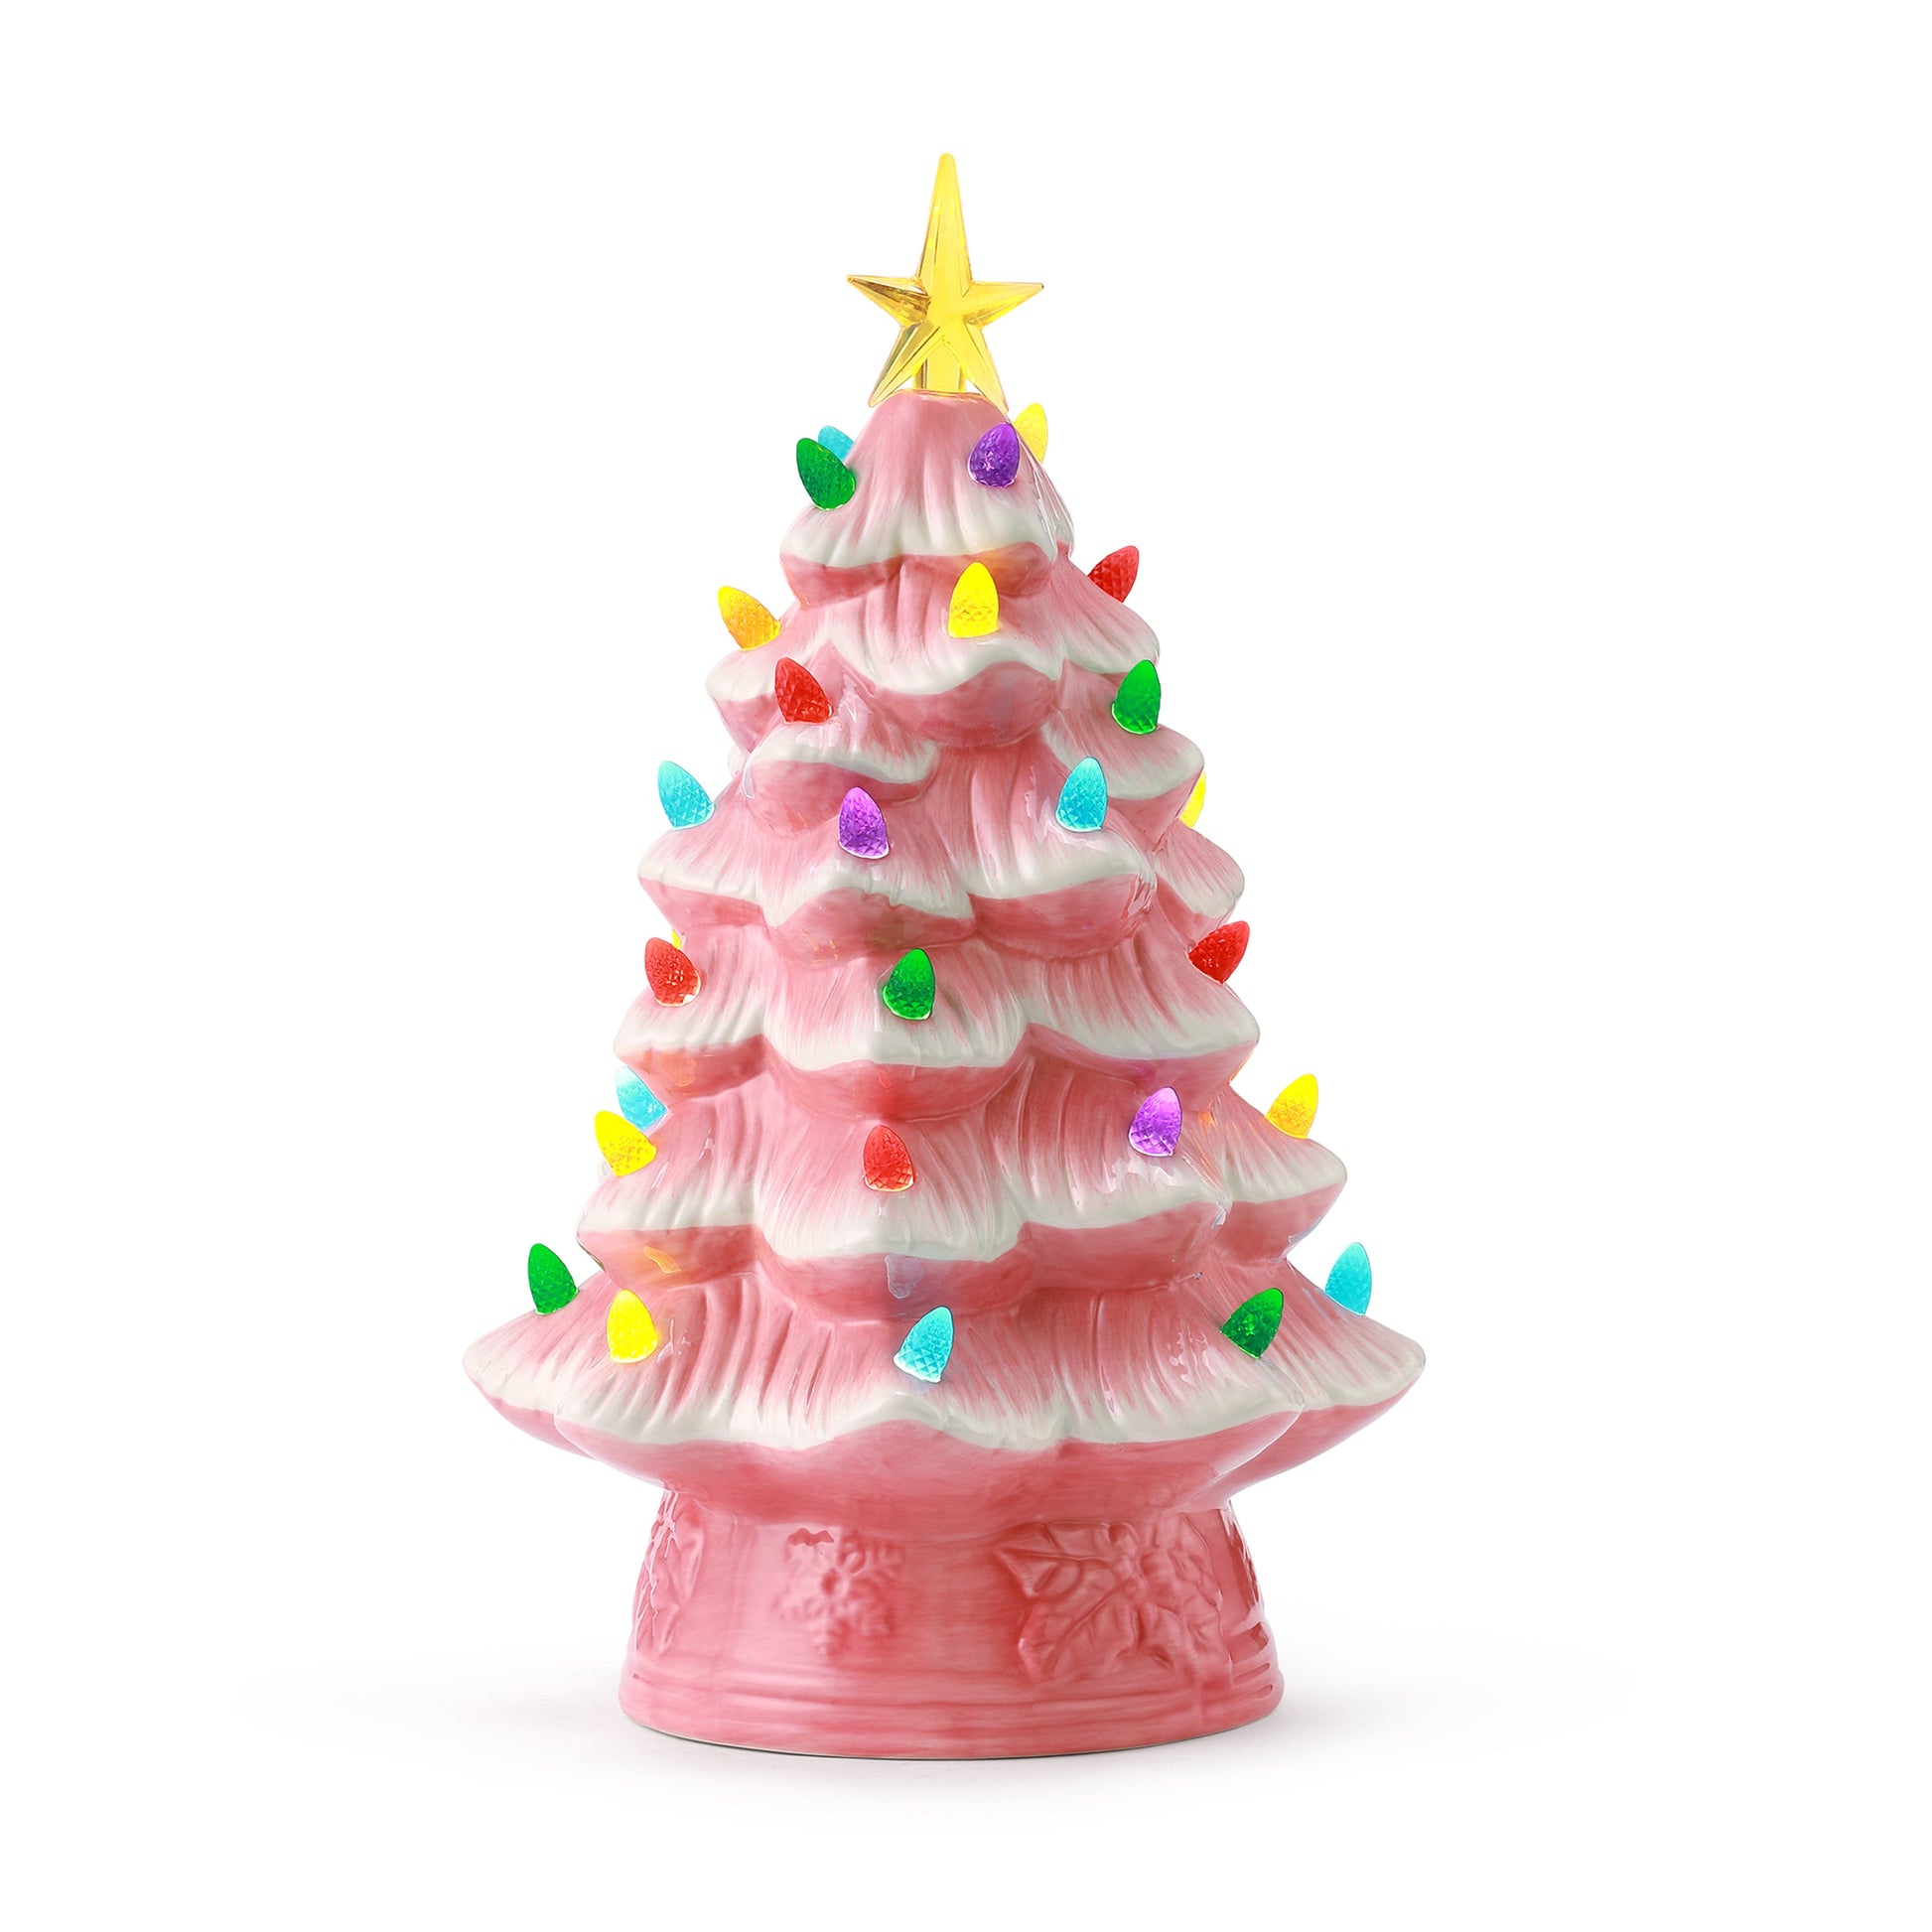 12" Nostalgic Ceramic Tree - Pink - Mr. Christmas